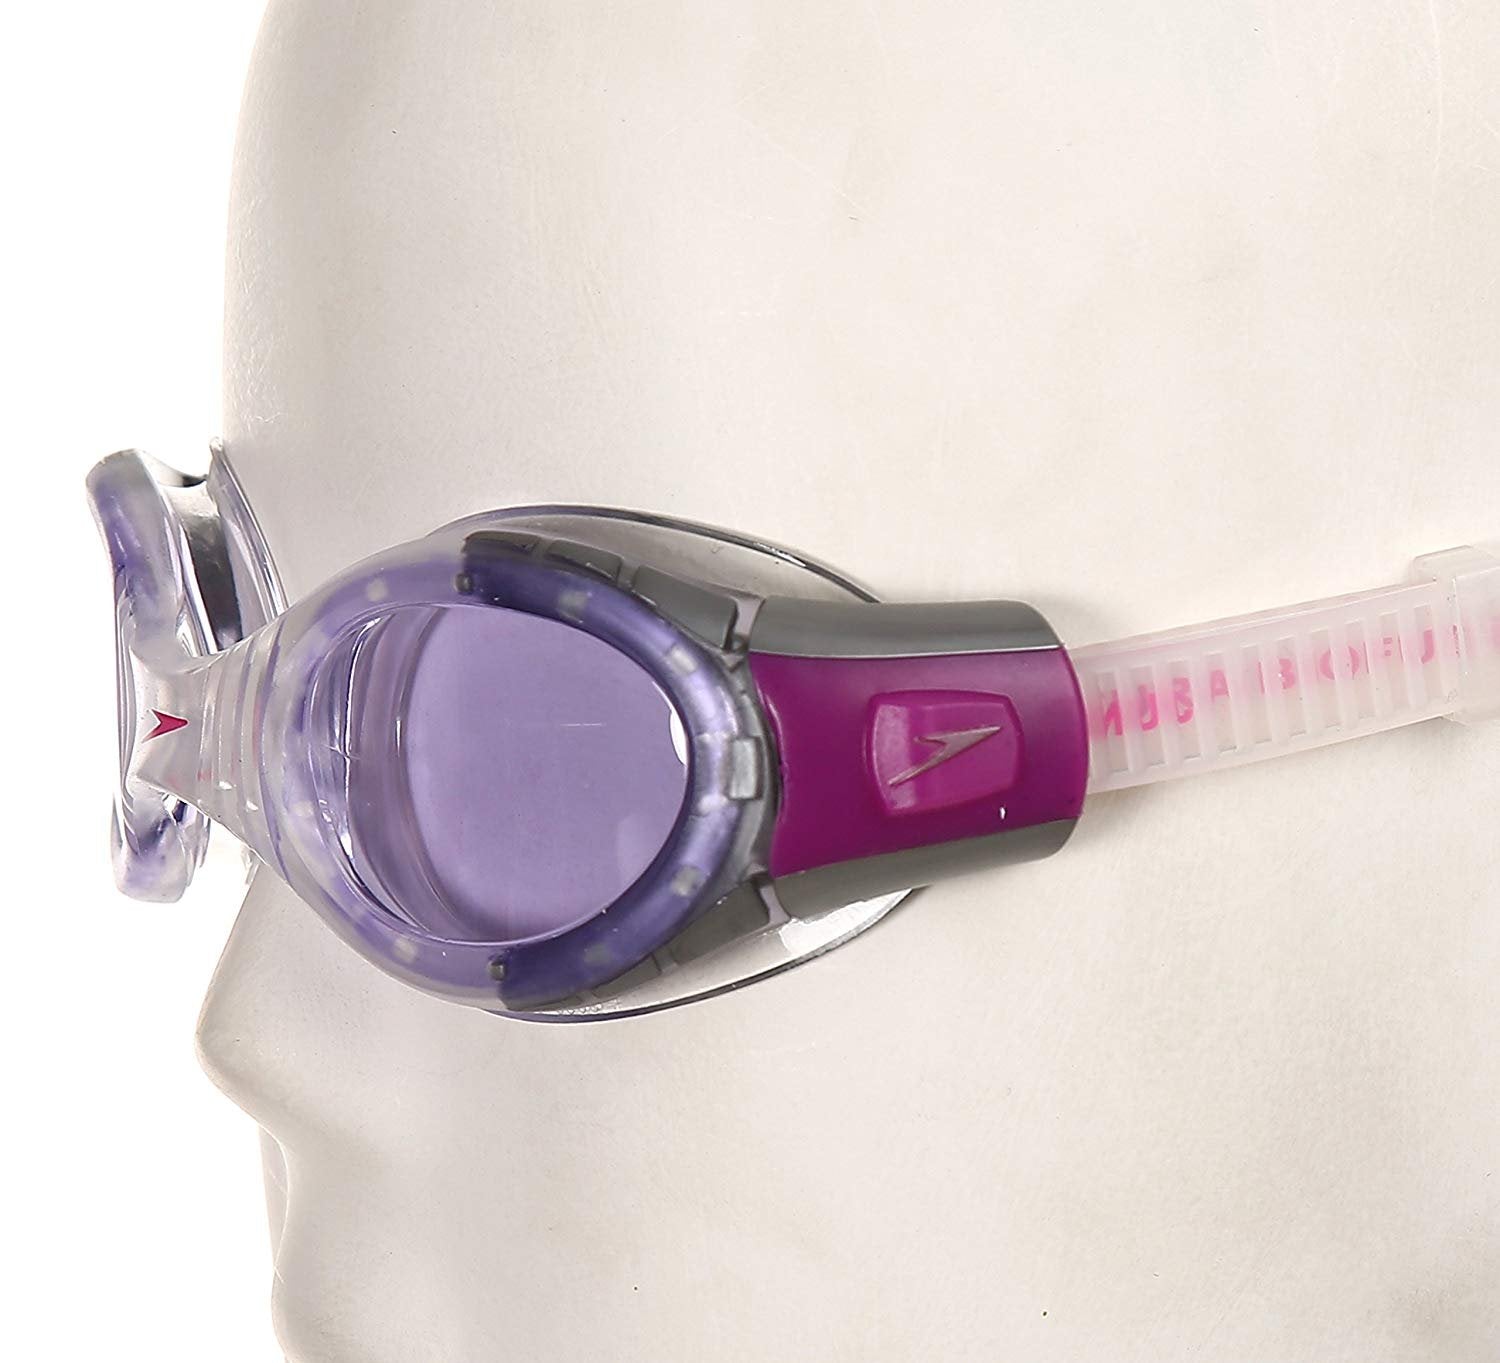 Speedo Futura Biofuse Junior Swimming Goggles - Silver Purple - Best Price online Prokicksports.com